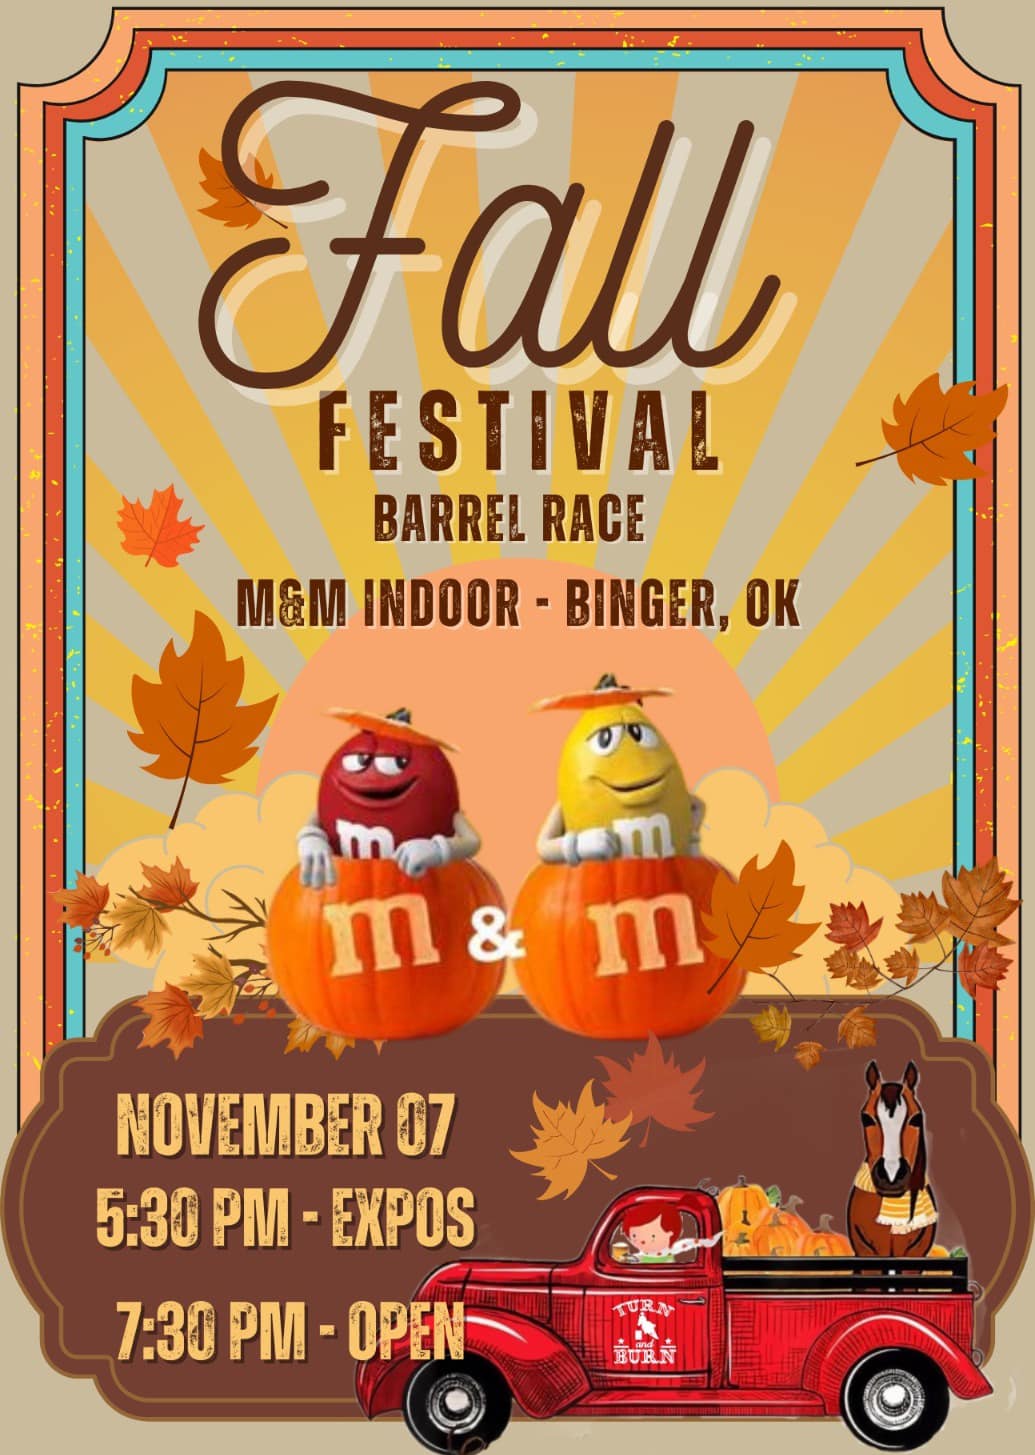 Fall Festival Barrel Race